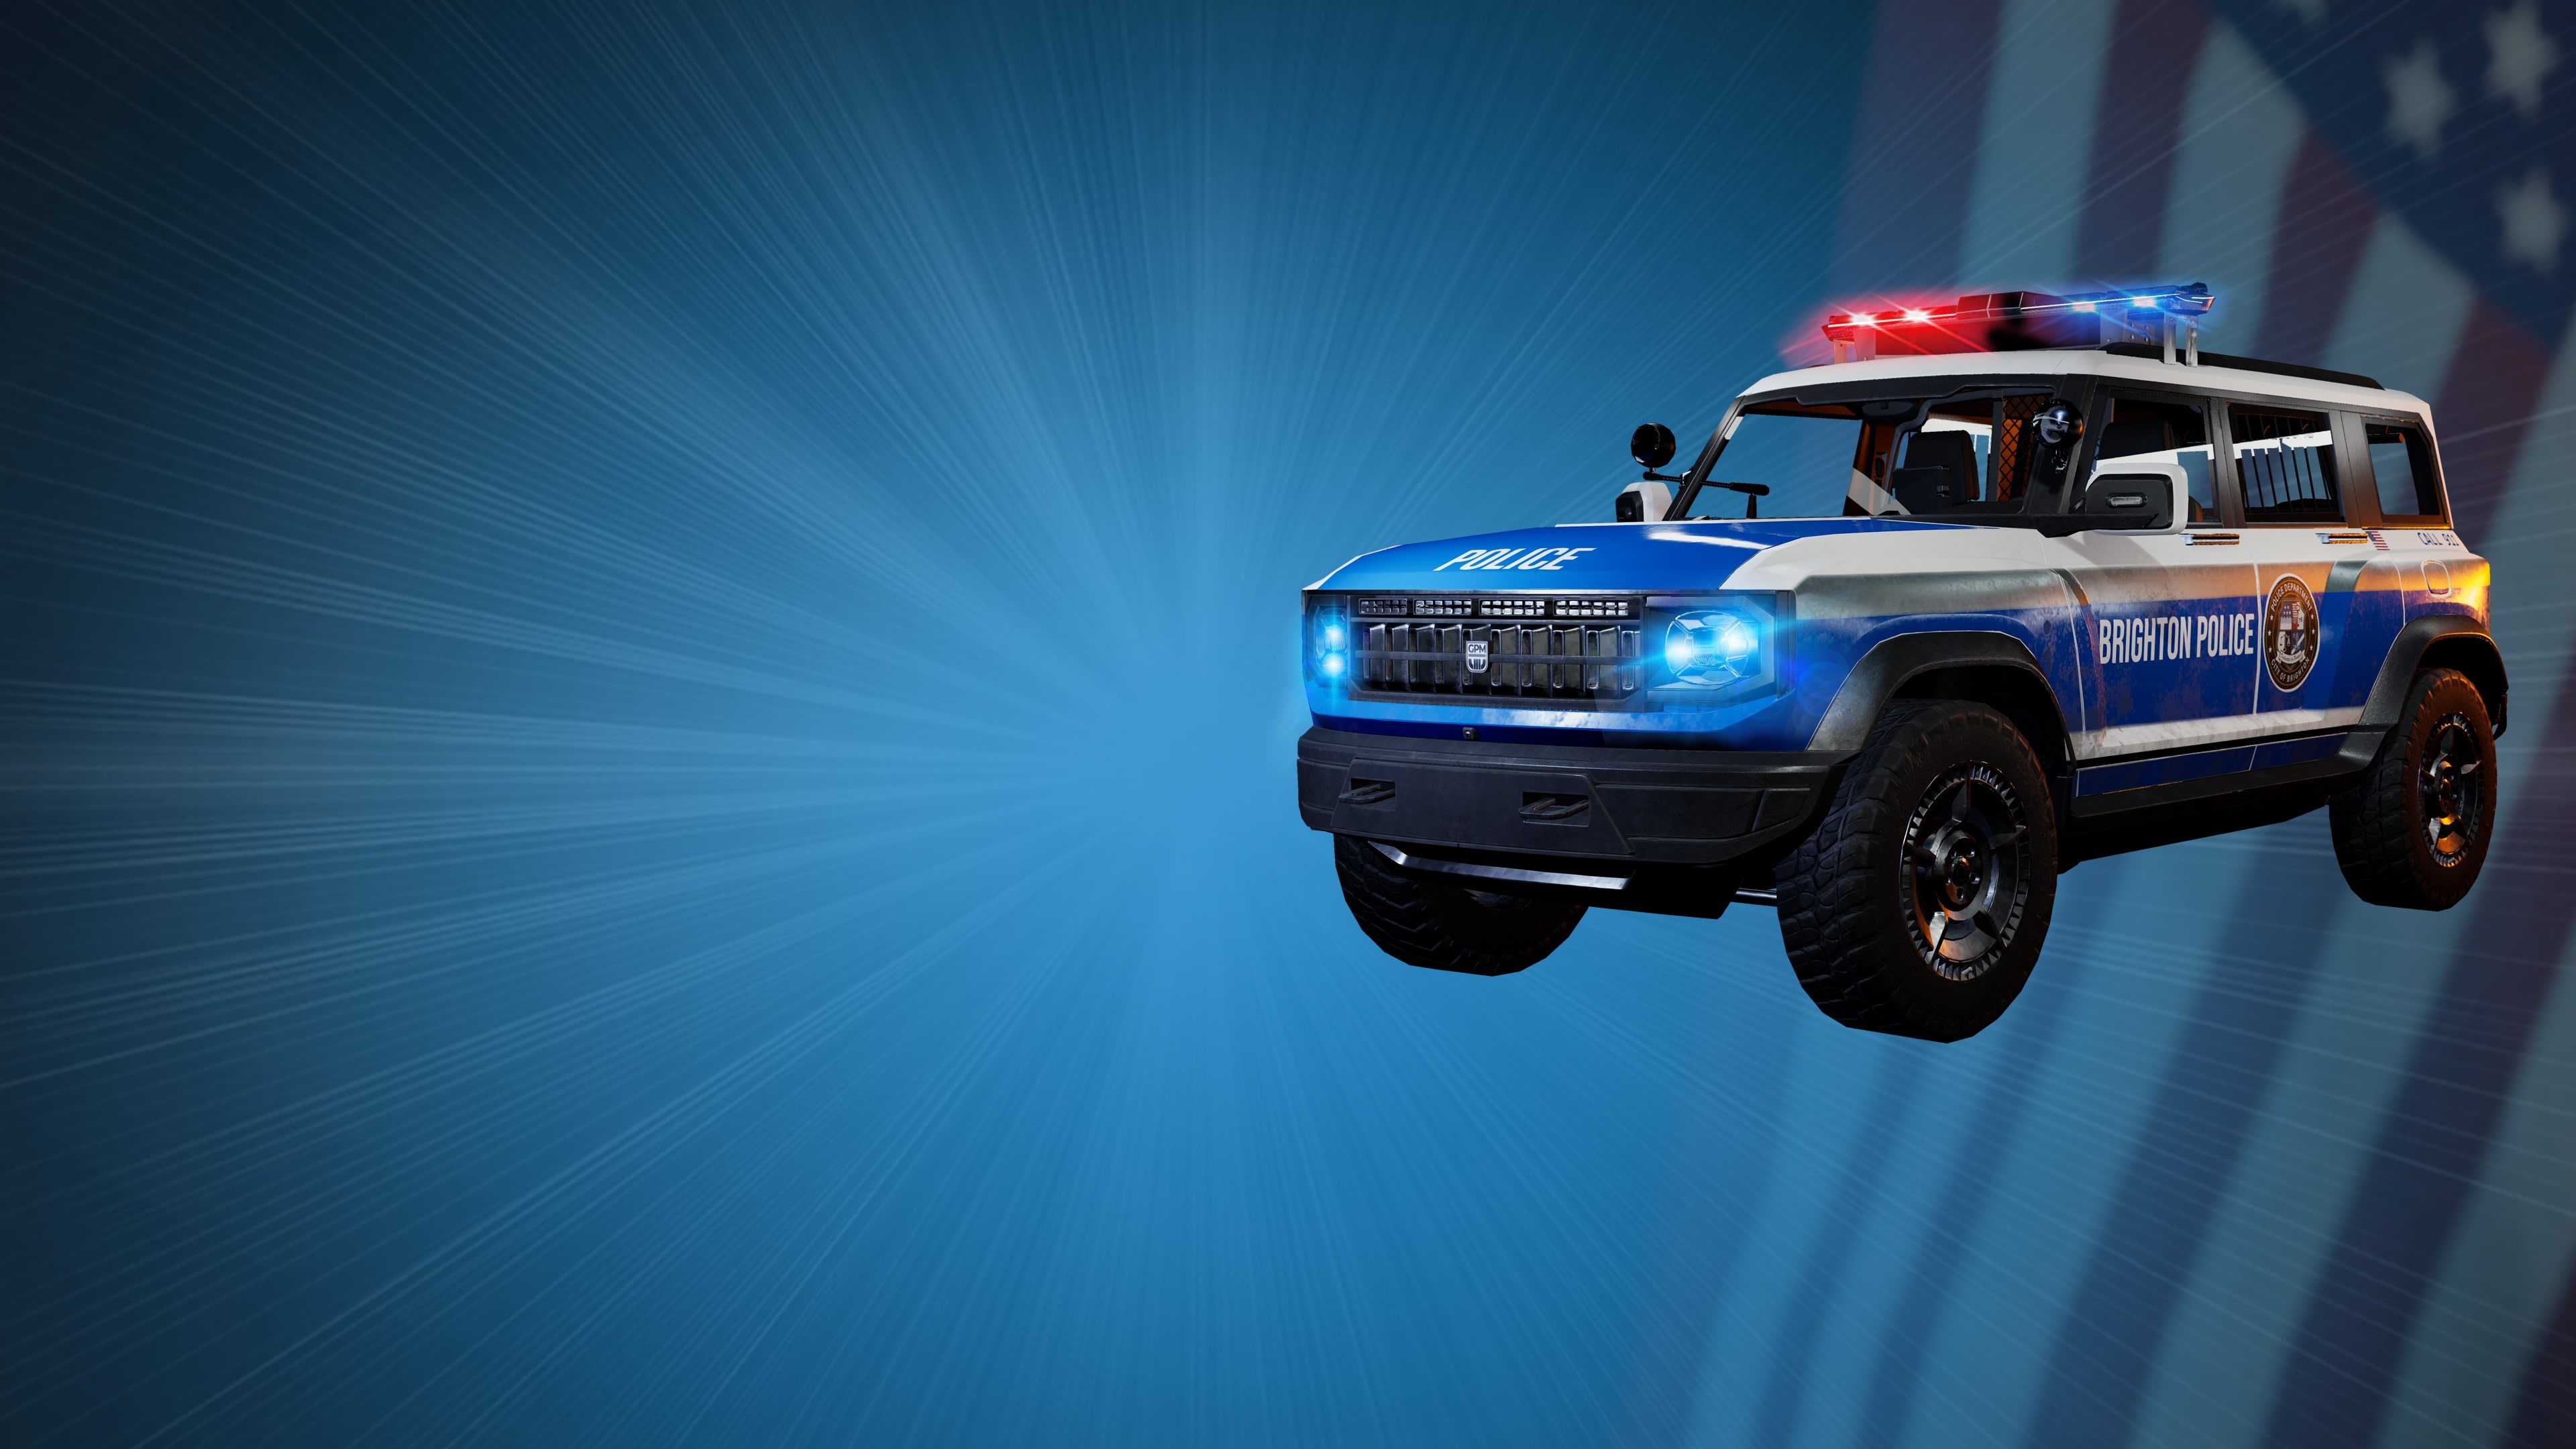 Police Simulator: Patrol Officers: Warden Police Vehicle DLC